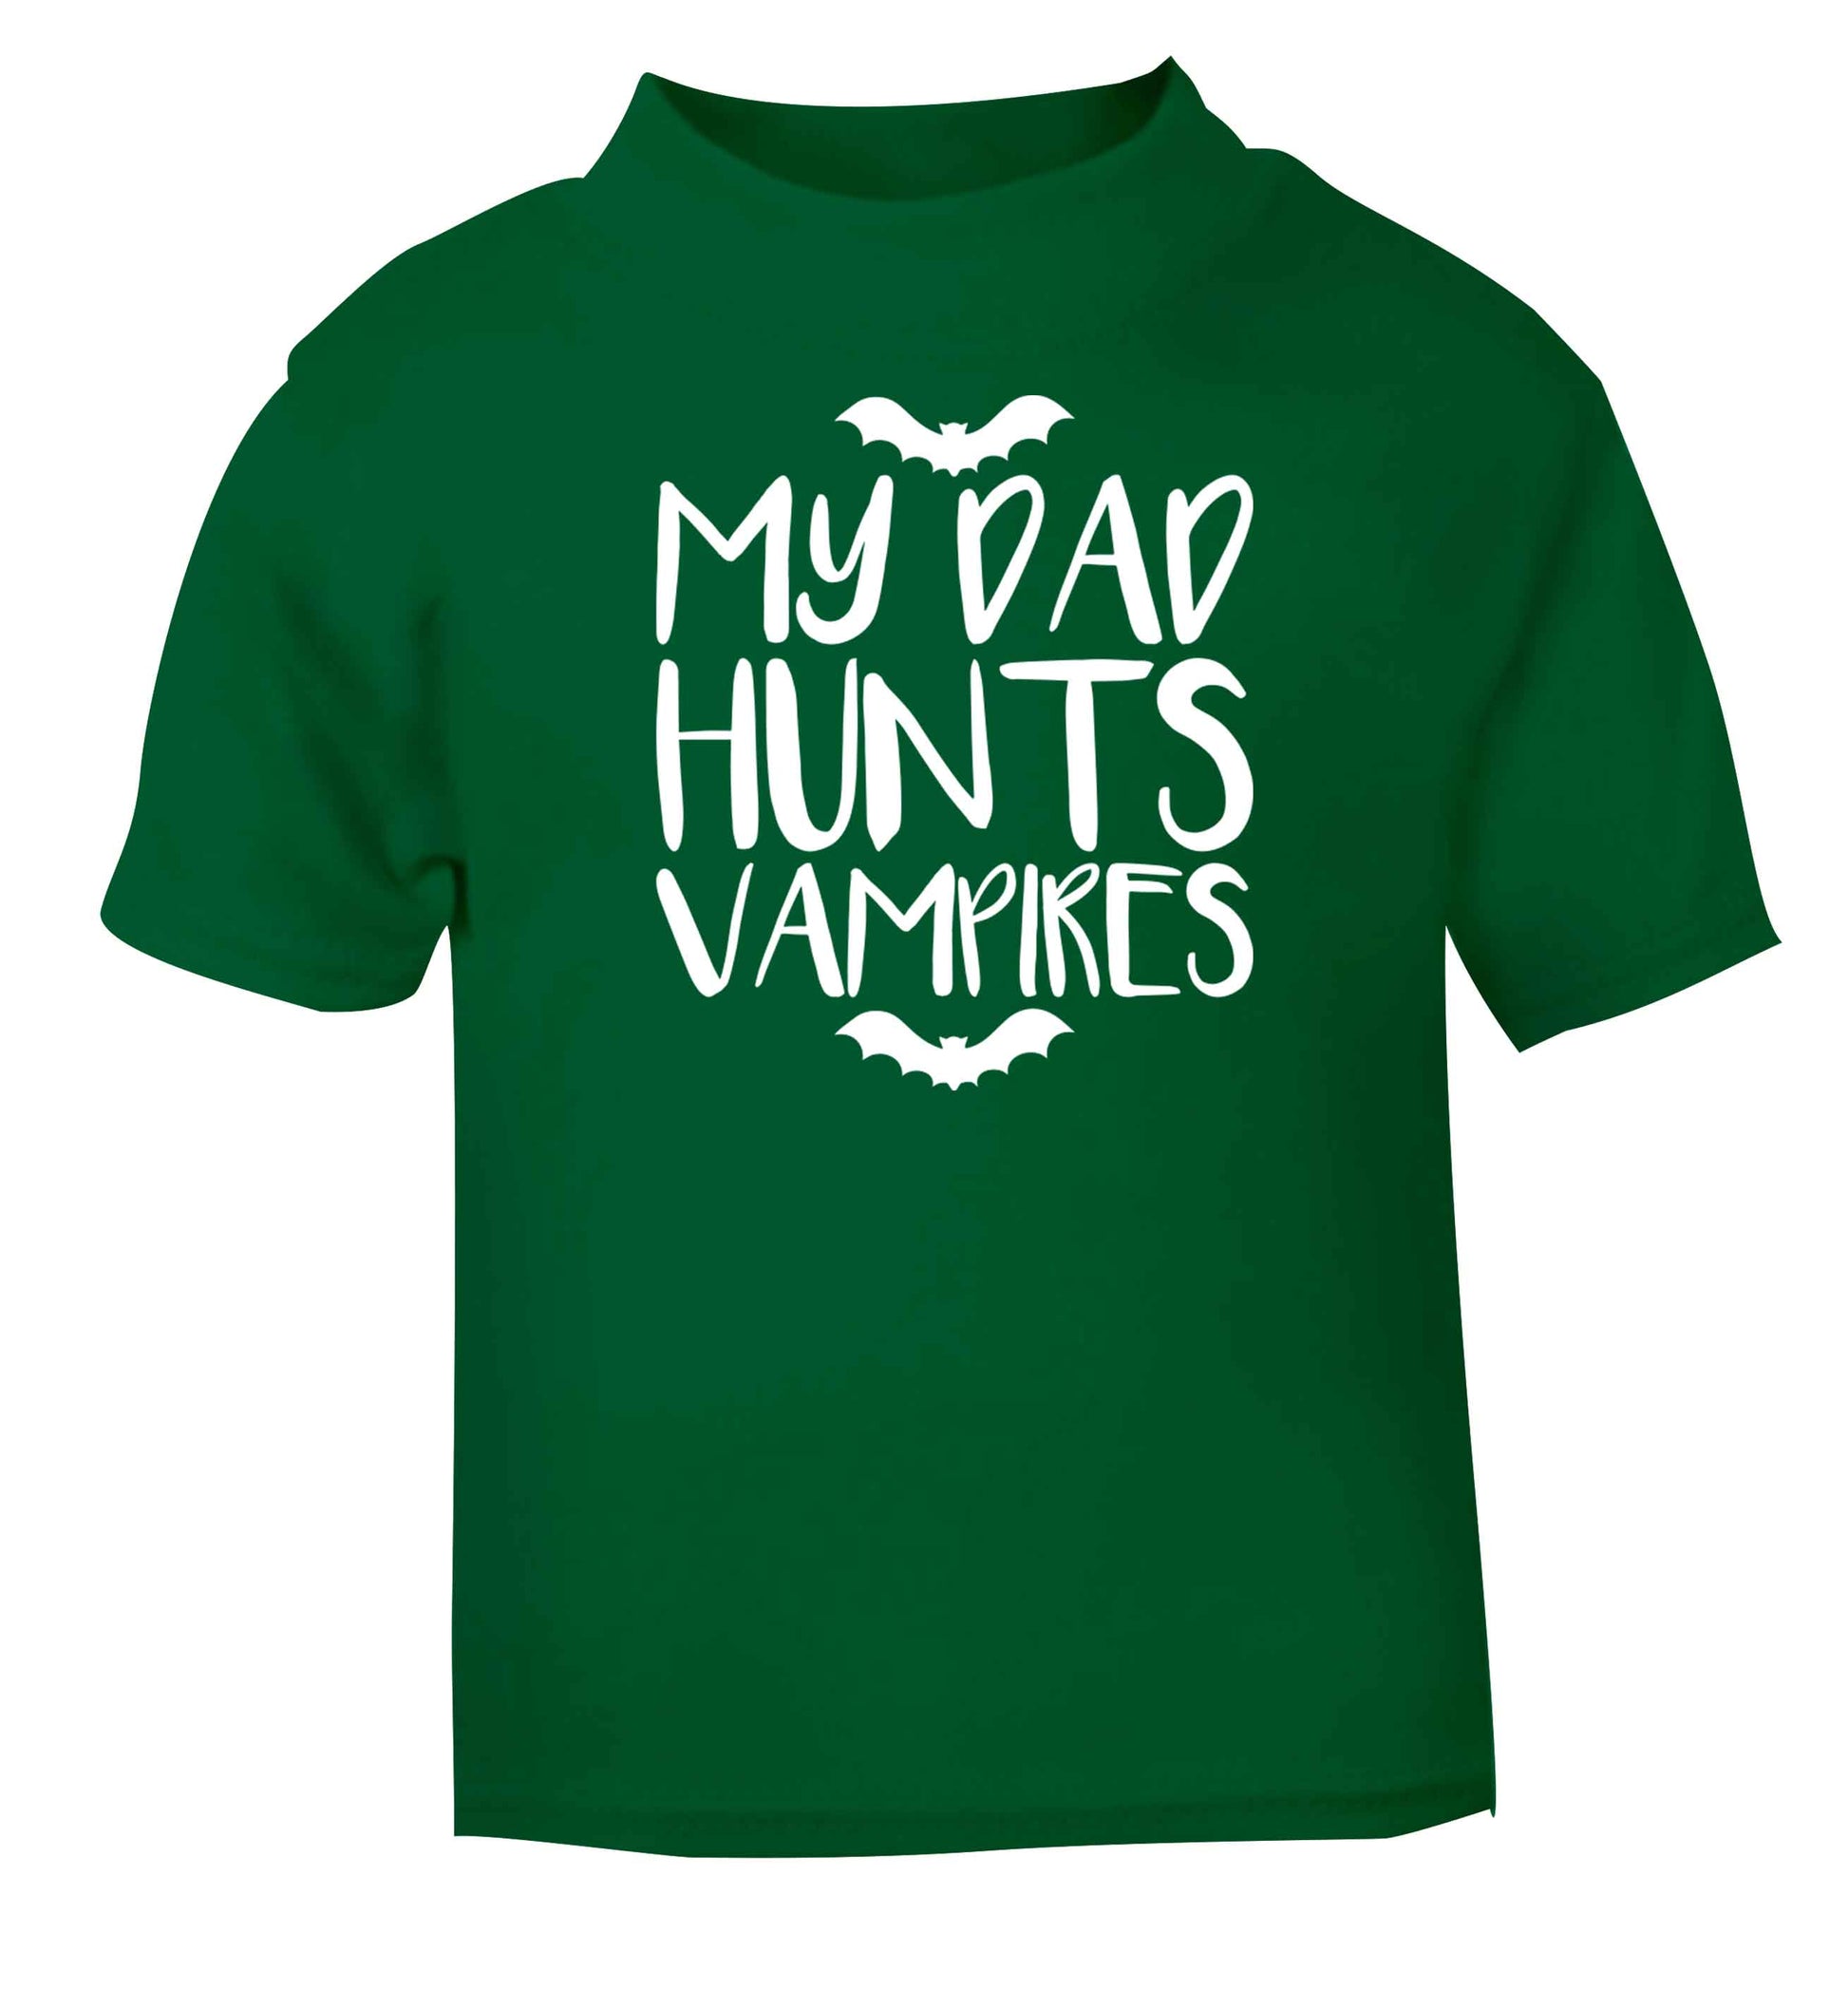 My dad hunts vampires green baby toddler Tshirt 2 Years